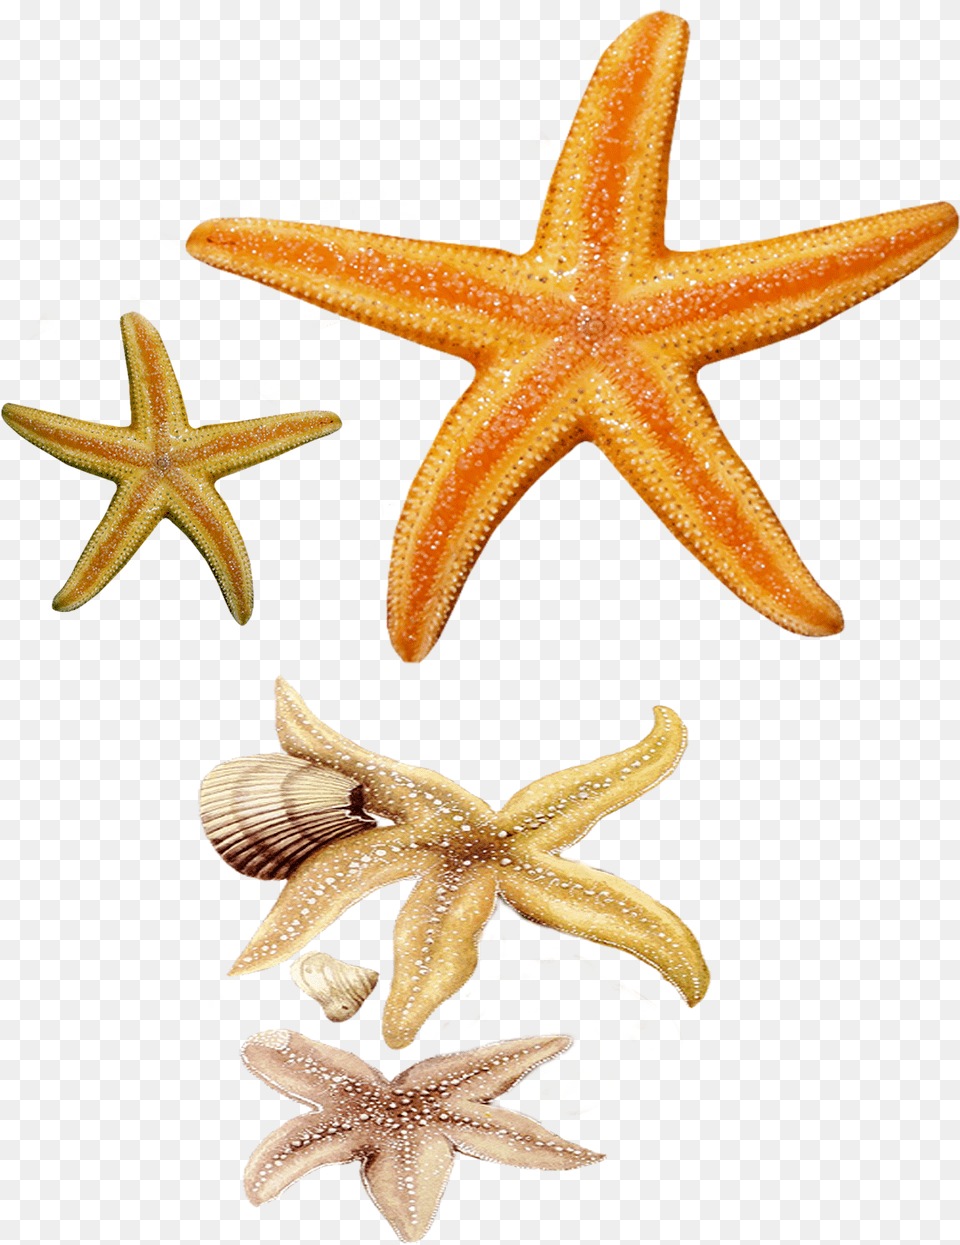 Star Fish And Clipart Free Fish Star, Animal, Invertebrate, Sea Life, Starfish Png Image